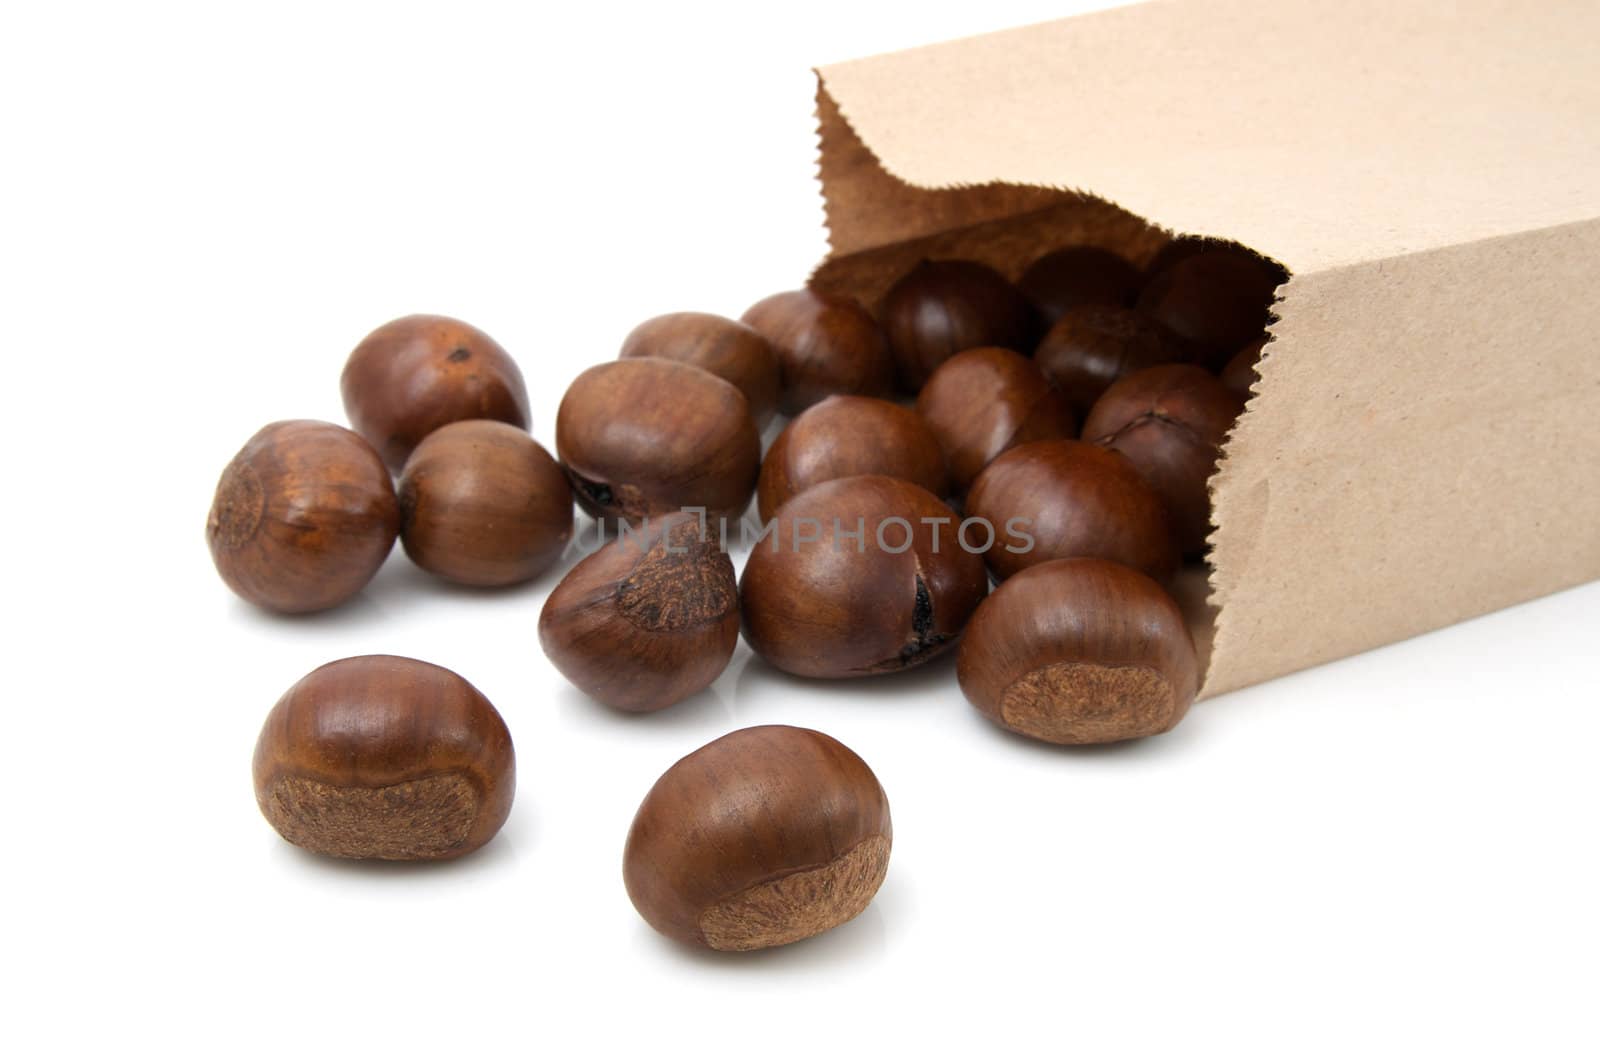 Chestnuts in paper bag